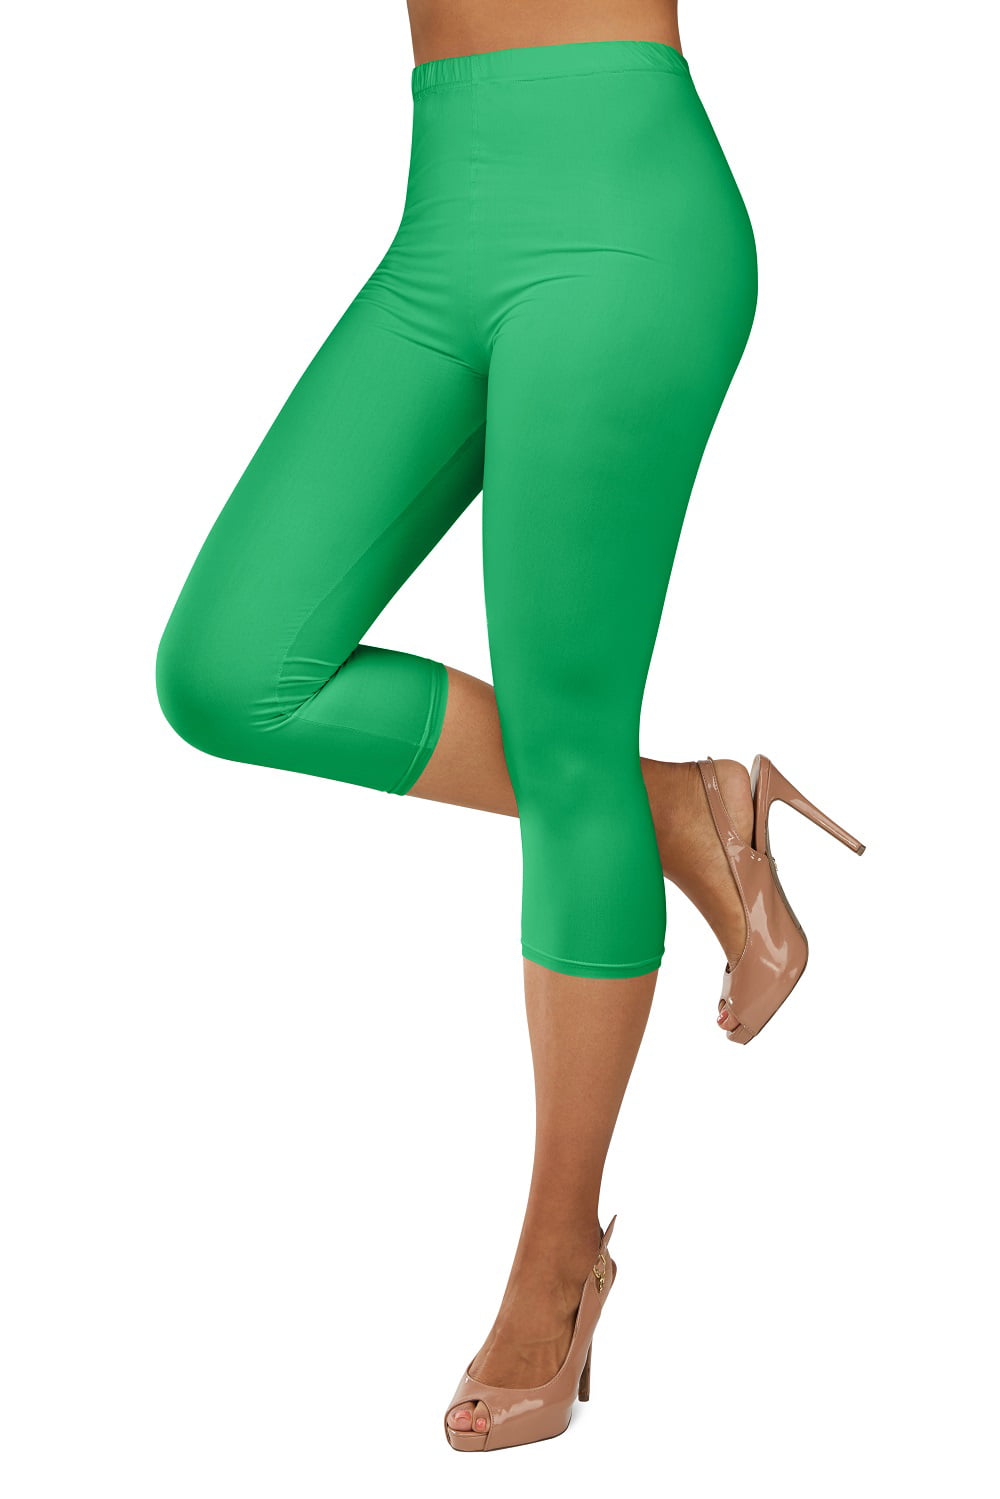 Gilbin Ultra Soft Capri High Waist Leggings for Women-Many Colors -One Size  & Plus Size (Green 3X-5X)